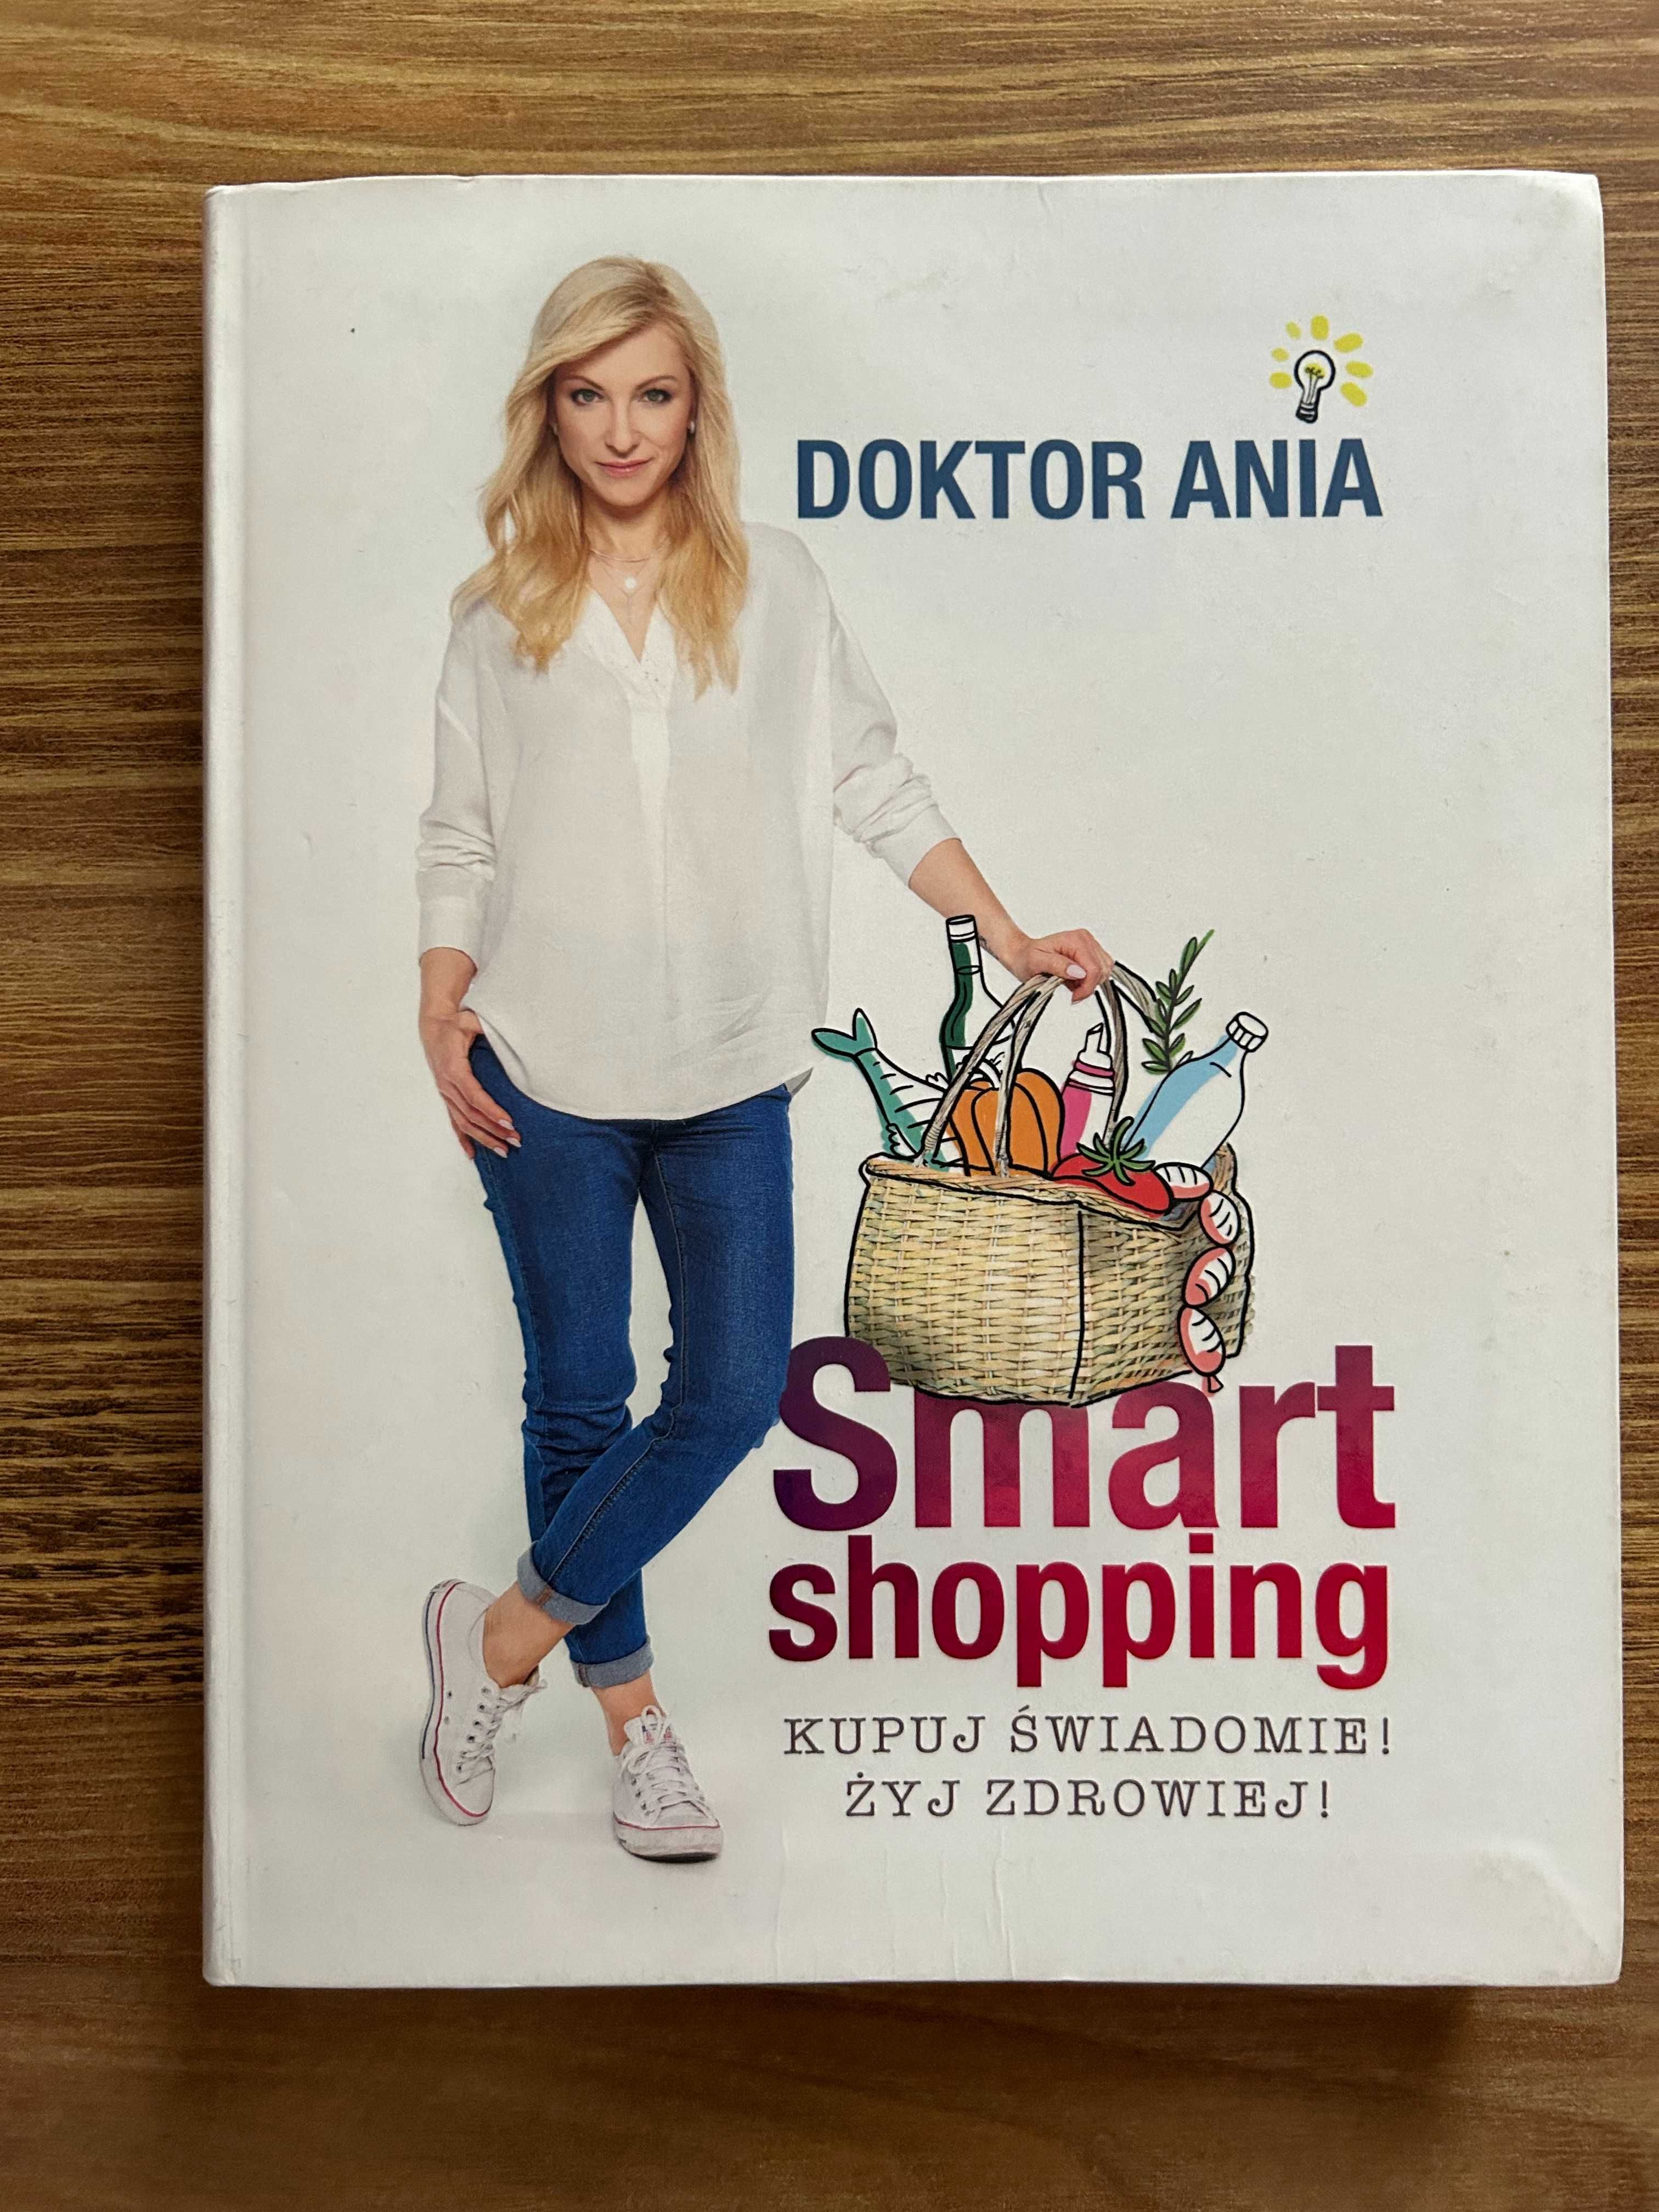 Smart shopping - Doktor Ania